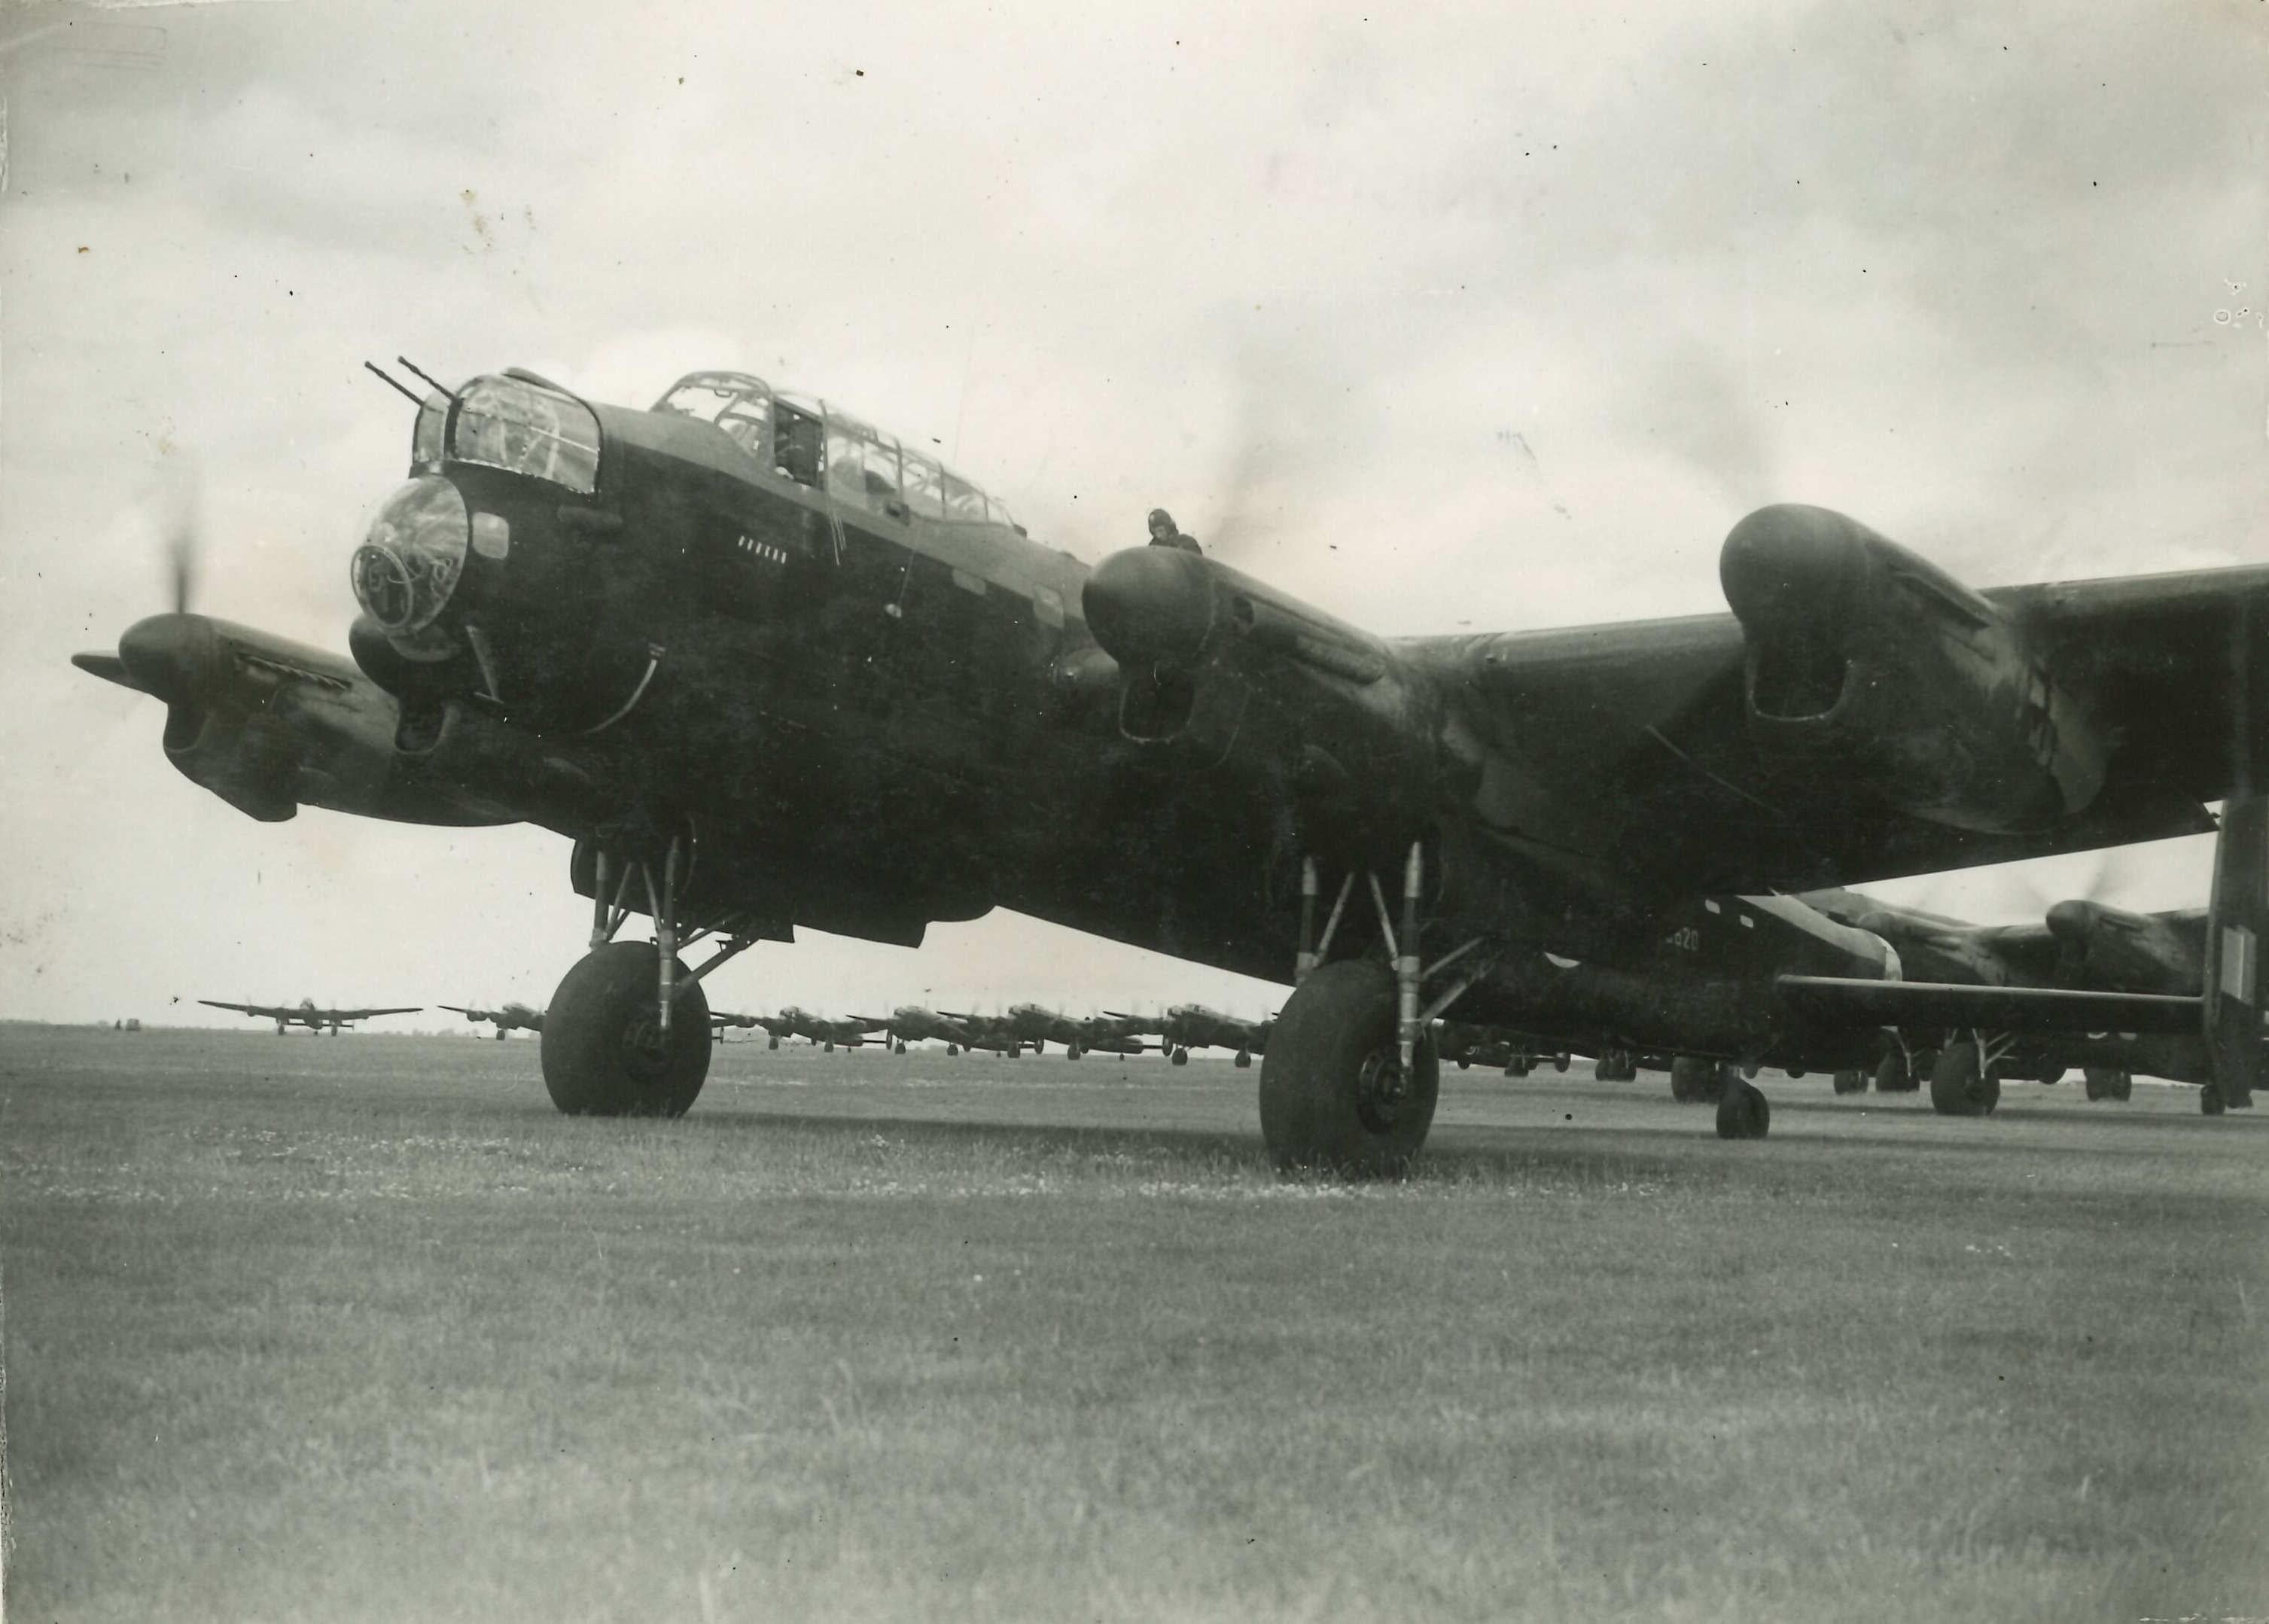 Unknown Black and White Photograph - RAF Lancaster Bomber photograph 25/06/1942 RAF Scampton 1000 aircraft raid